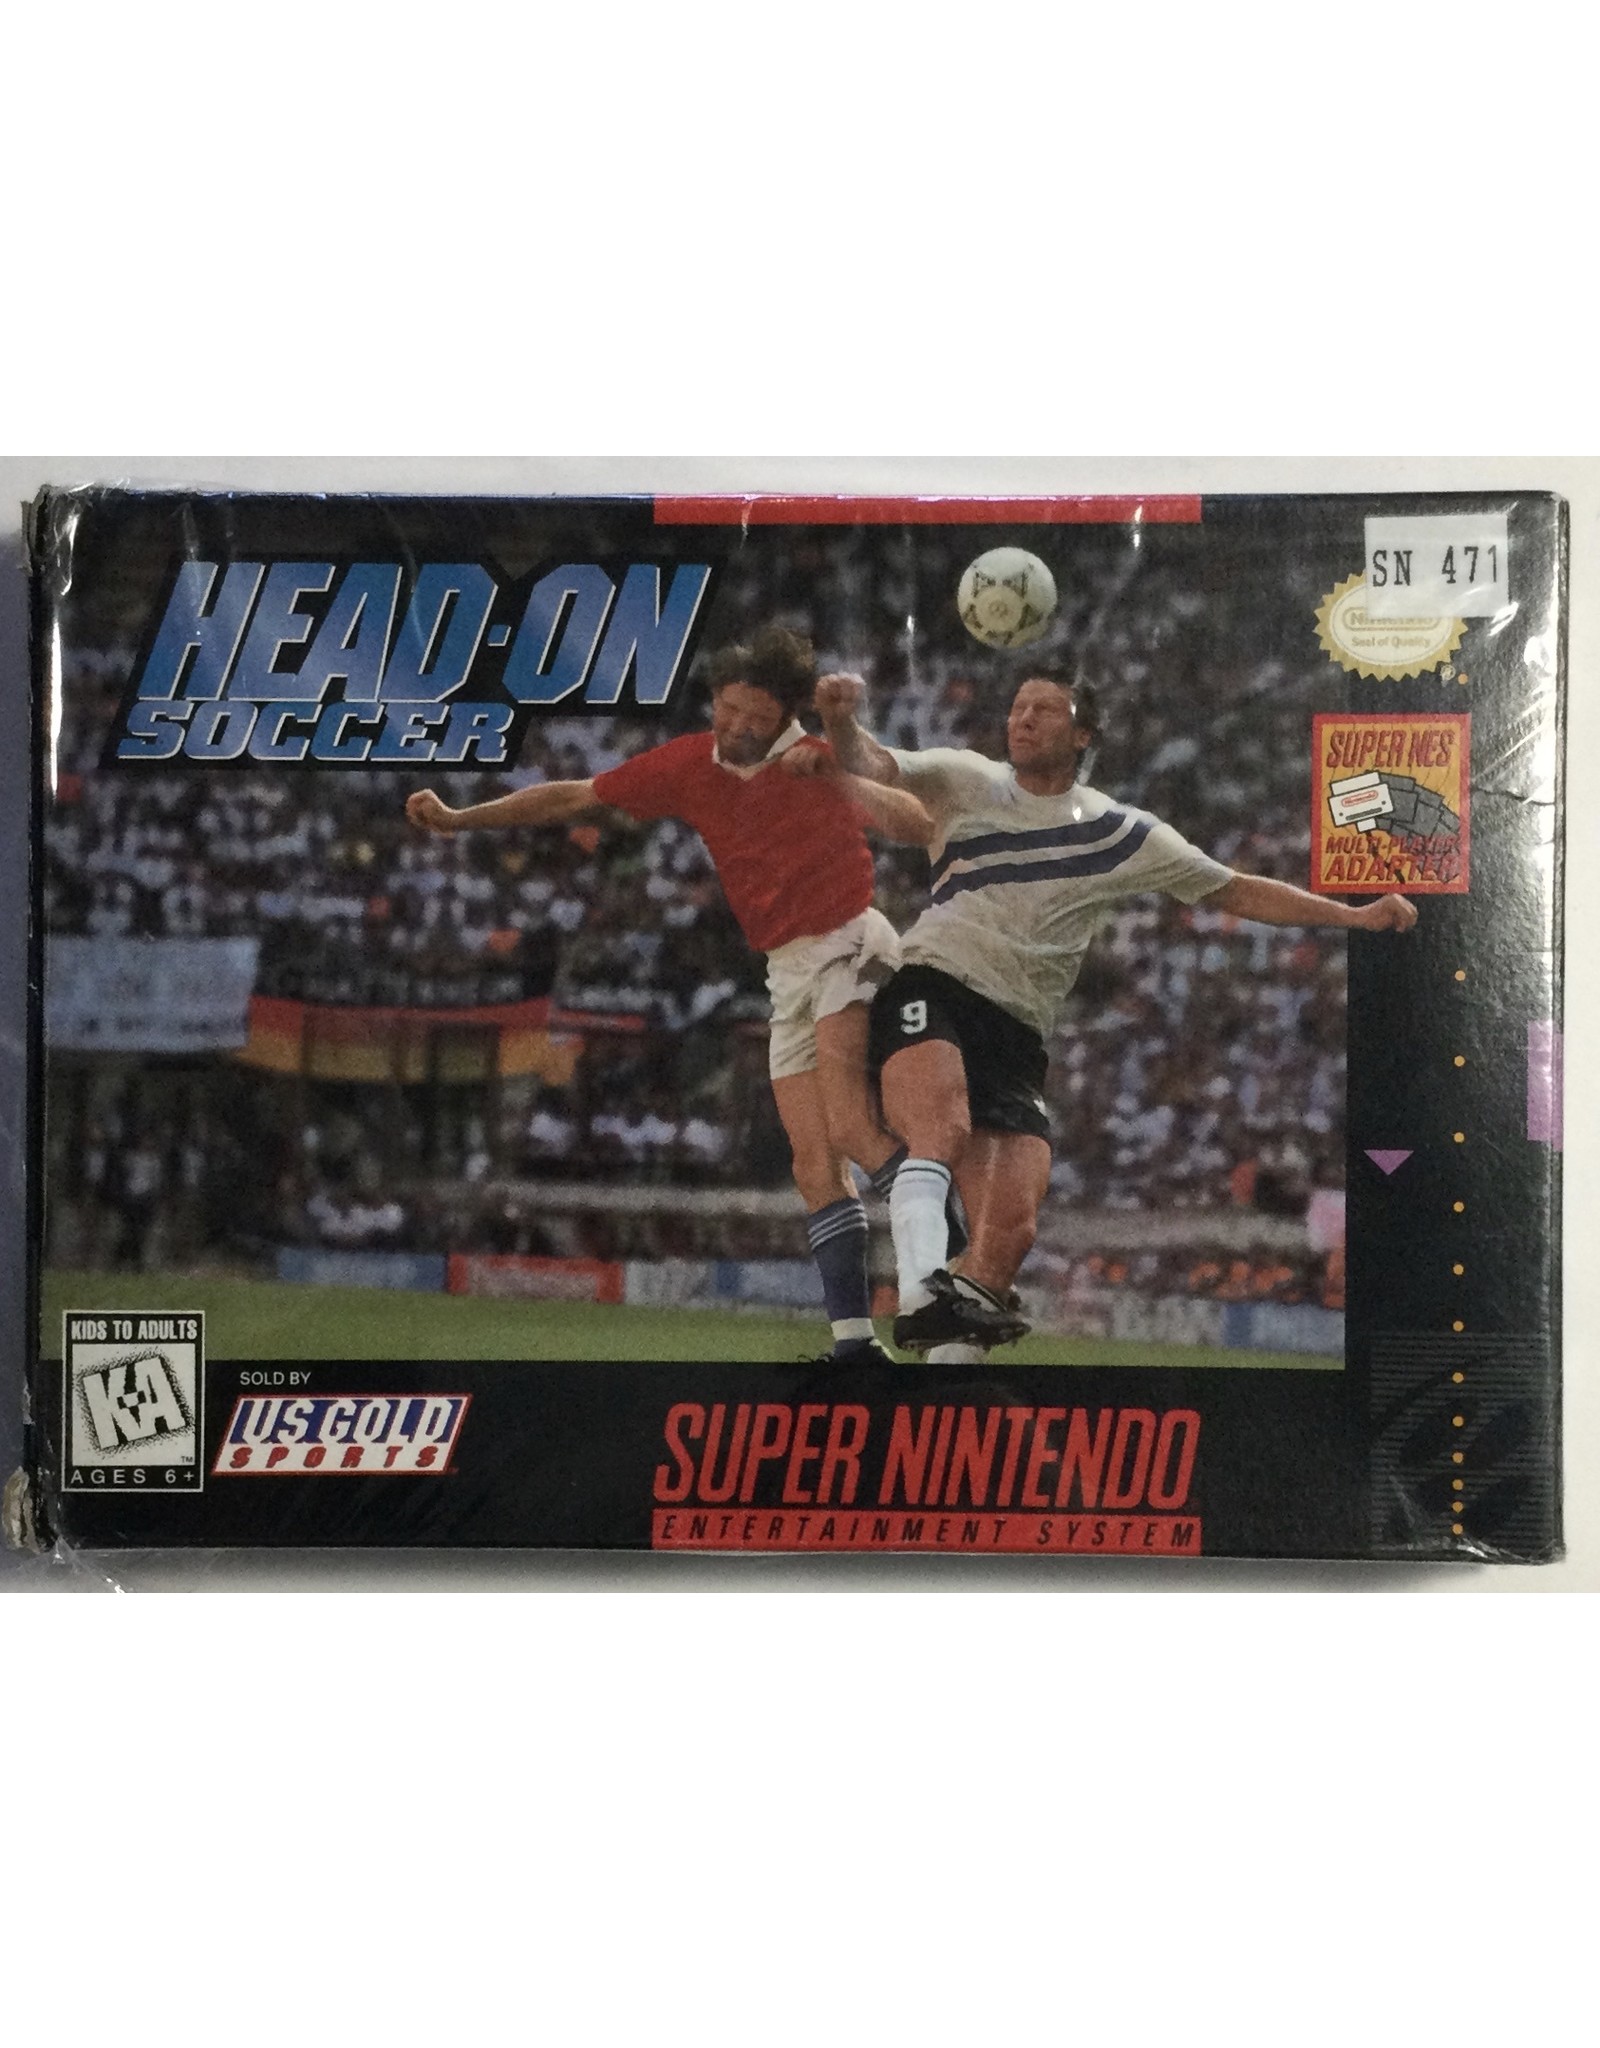 U.S. GOLD SPORTS Head-on Soccer for Super Nintendo Entertainment System (SNES) - CIB